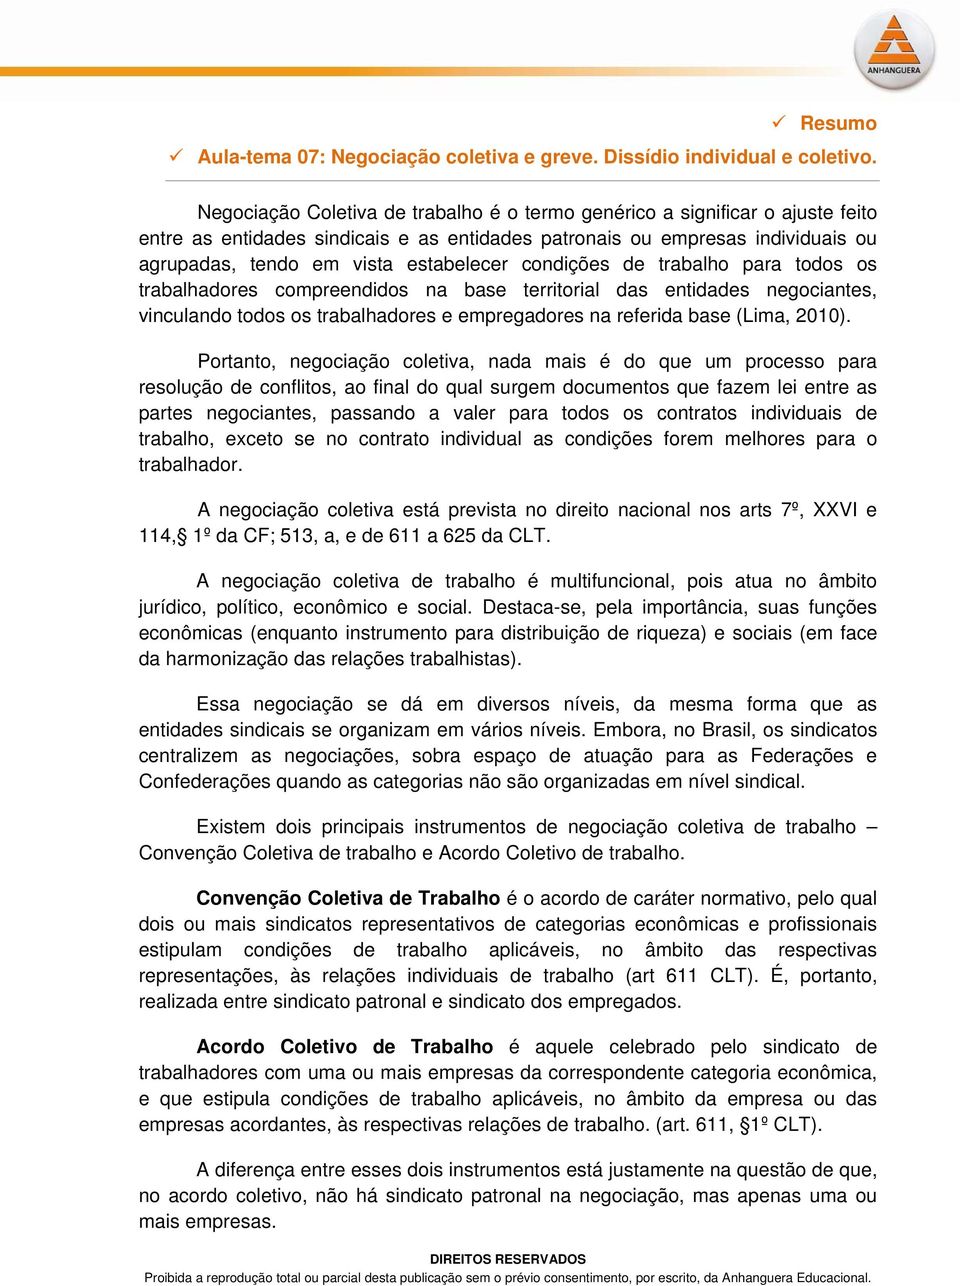 condições de trabalho para todos os trabalhadores compreendidos na base territorial das entidades negociantes, vinculando todos os trabalhadores e empregadores na referida base (Lima, 2010).